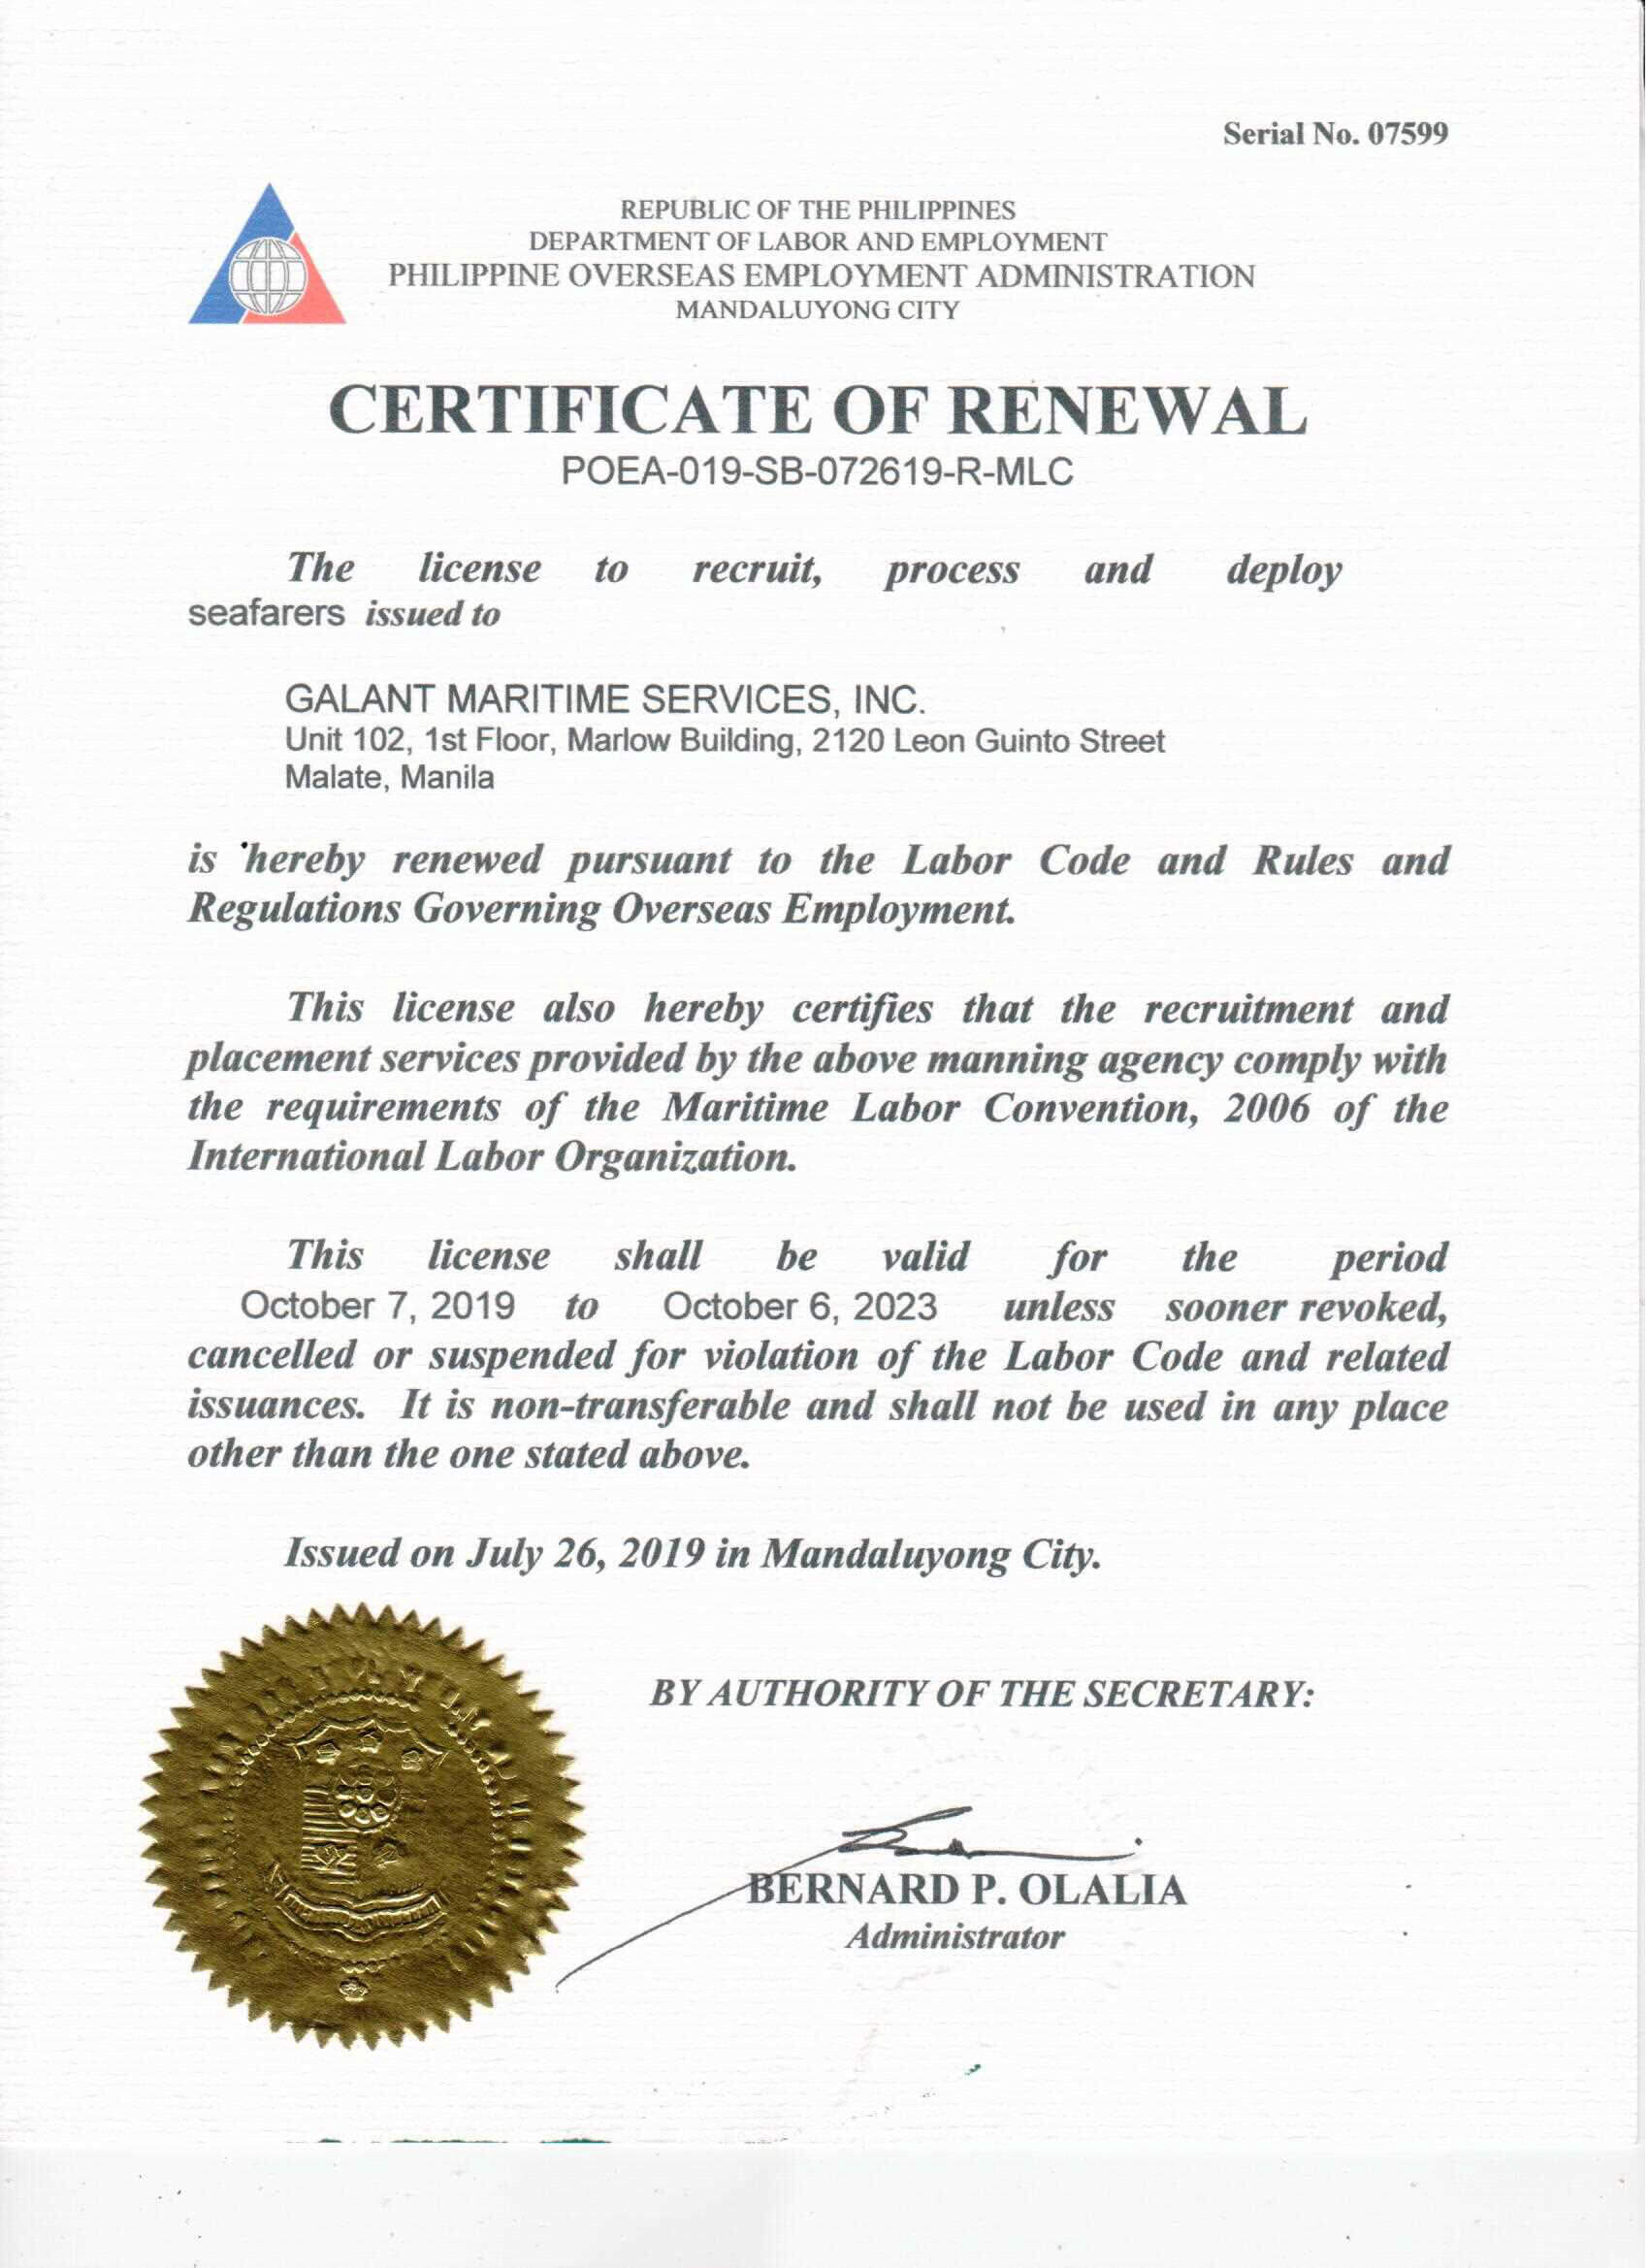 POEA - Certificate of Renewal